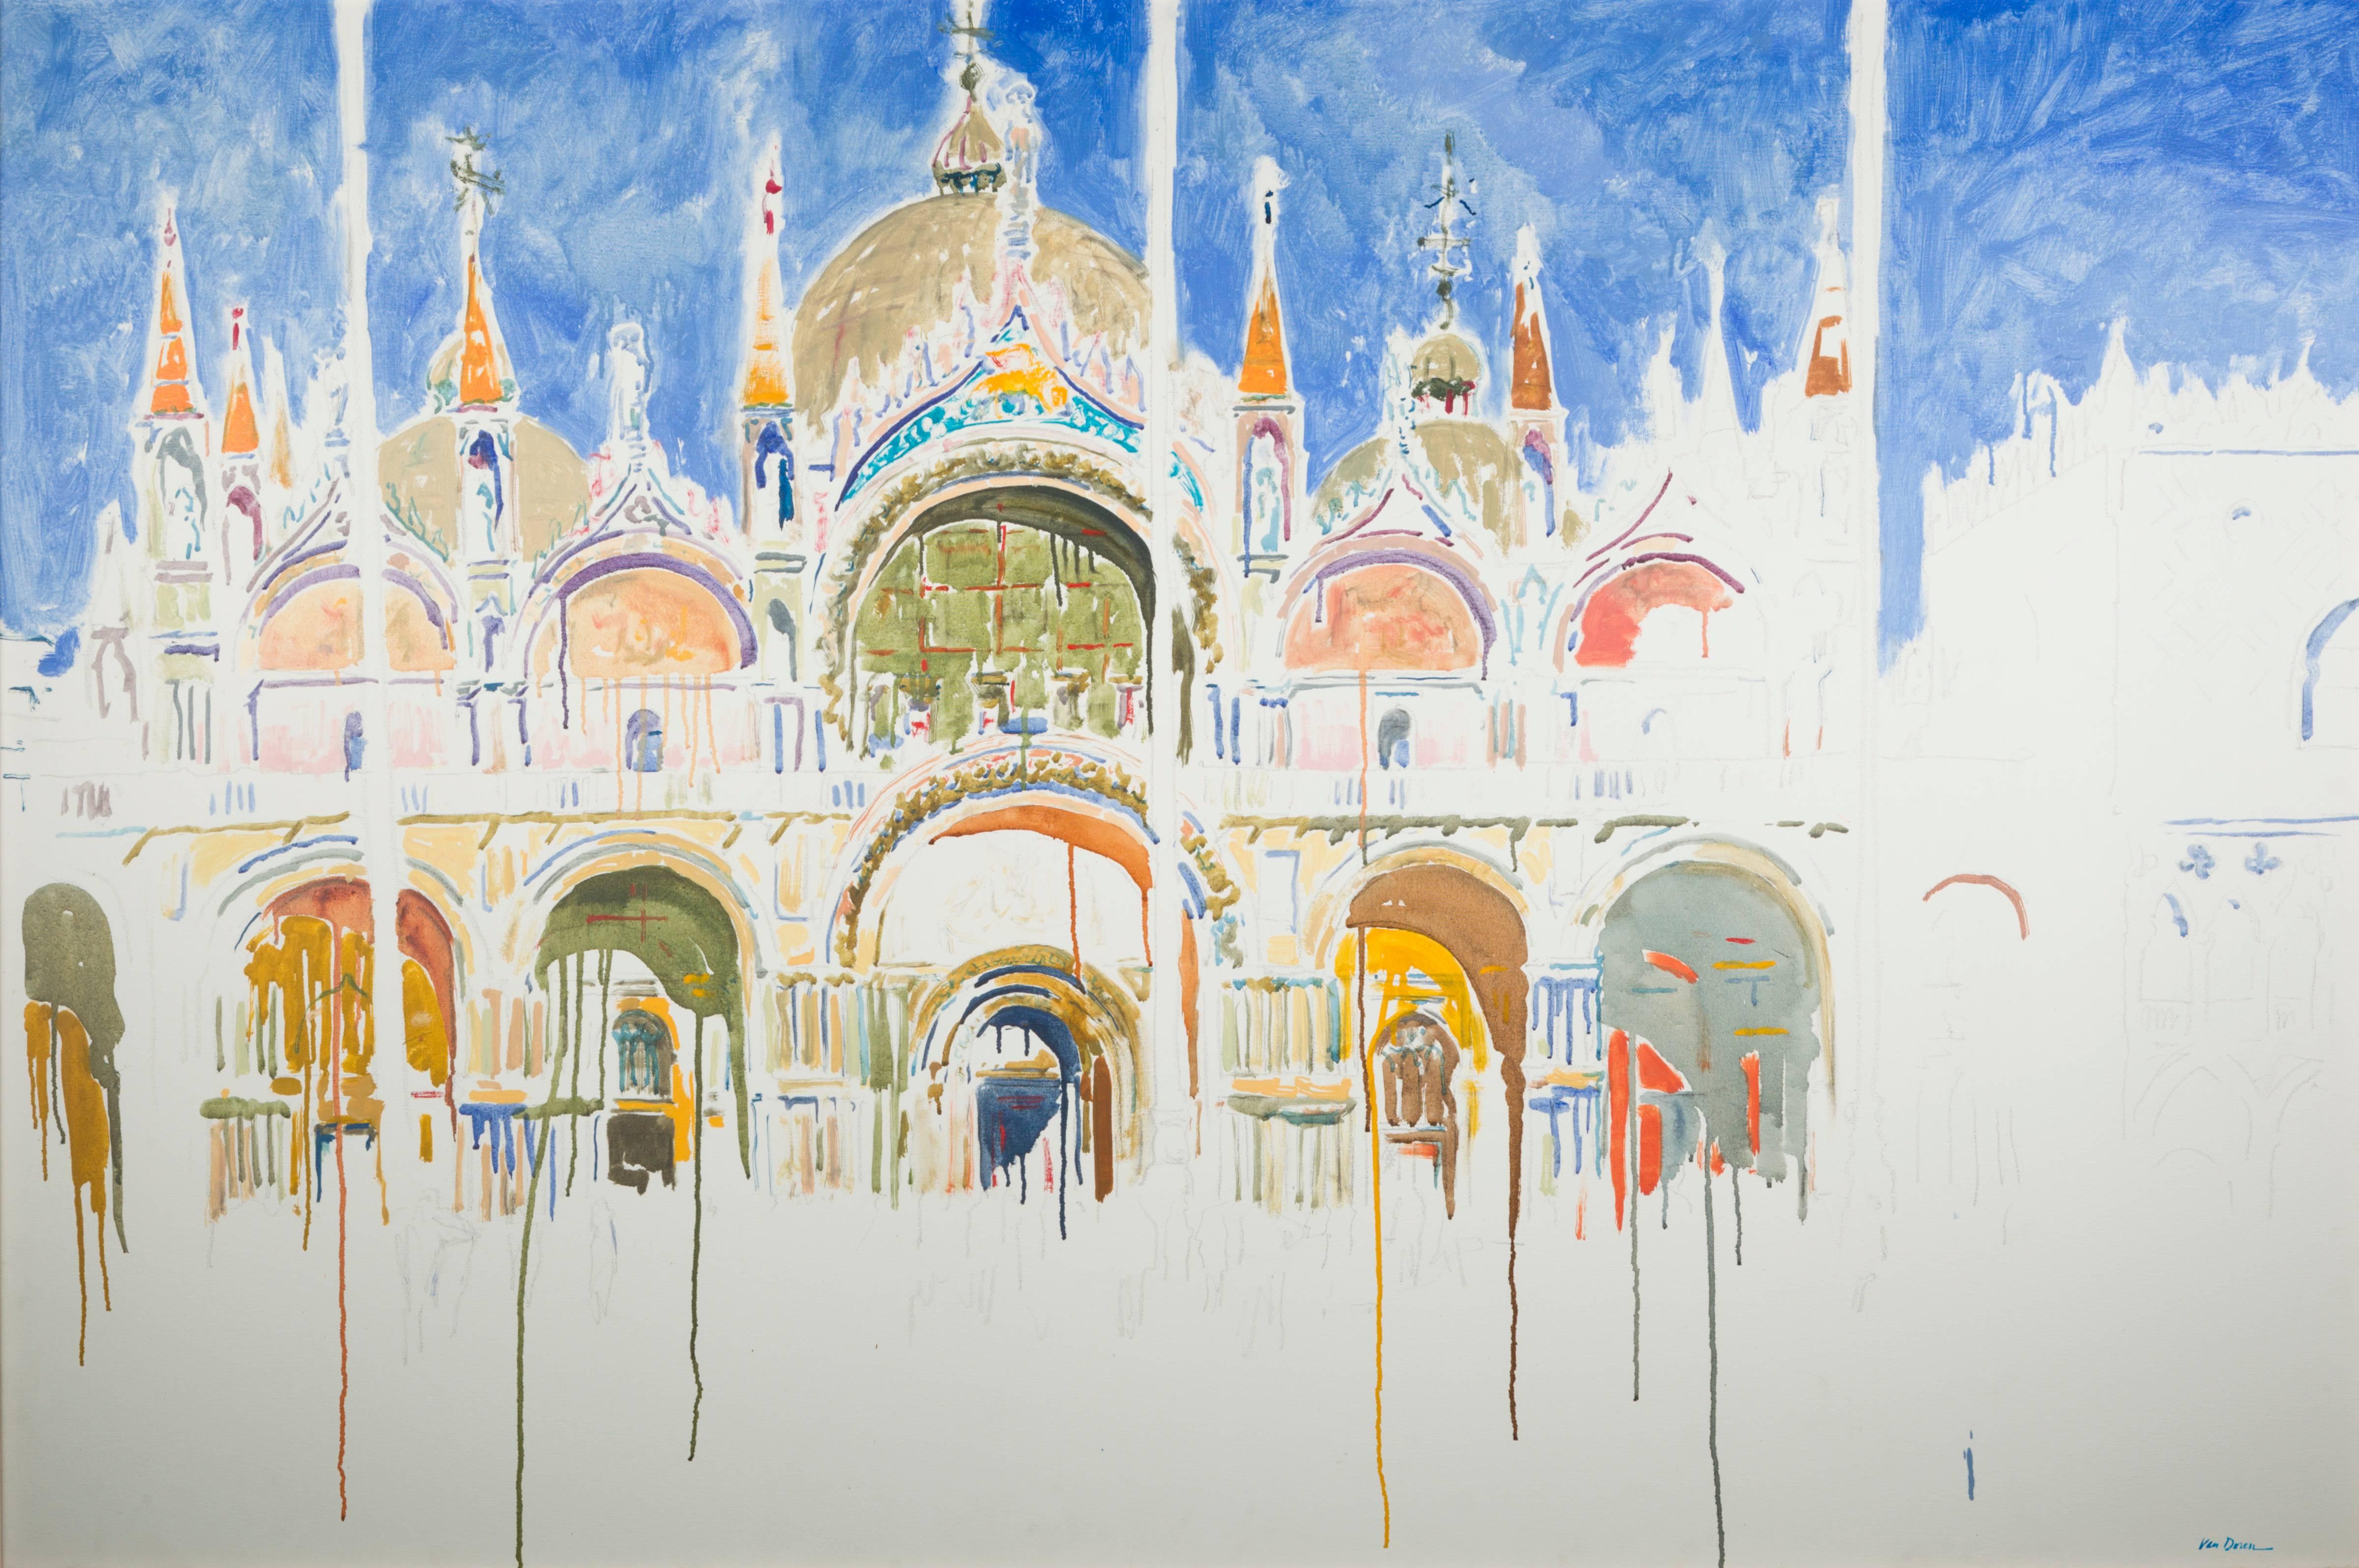 Exterior of the Basilica, Venice, Italy - Painting by Adam Van Doren